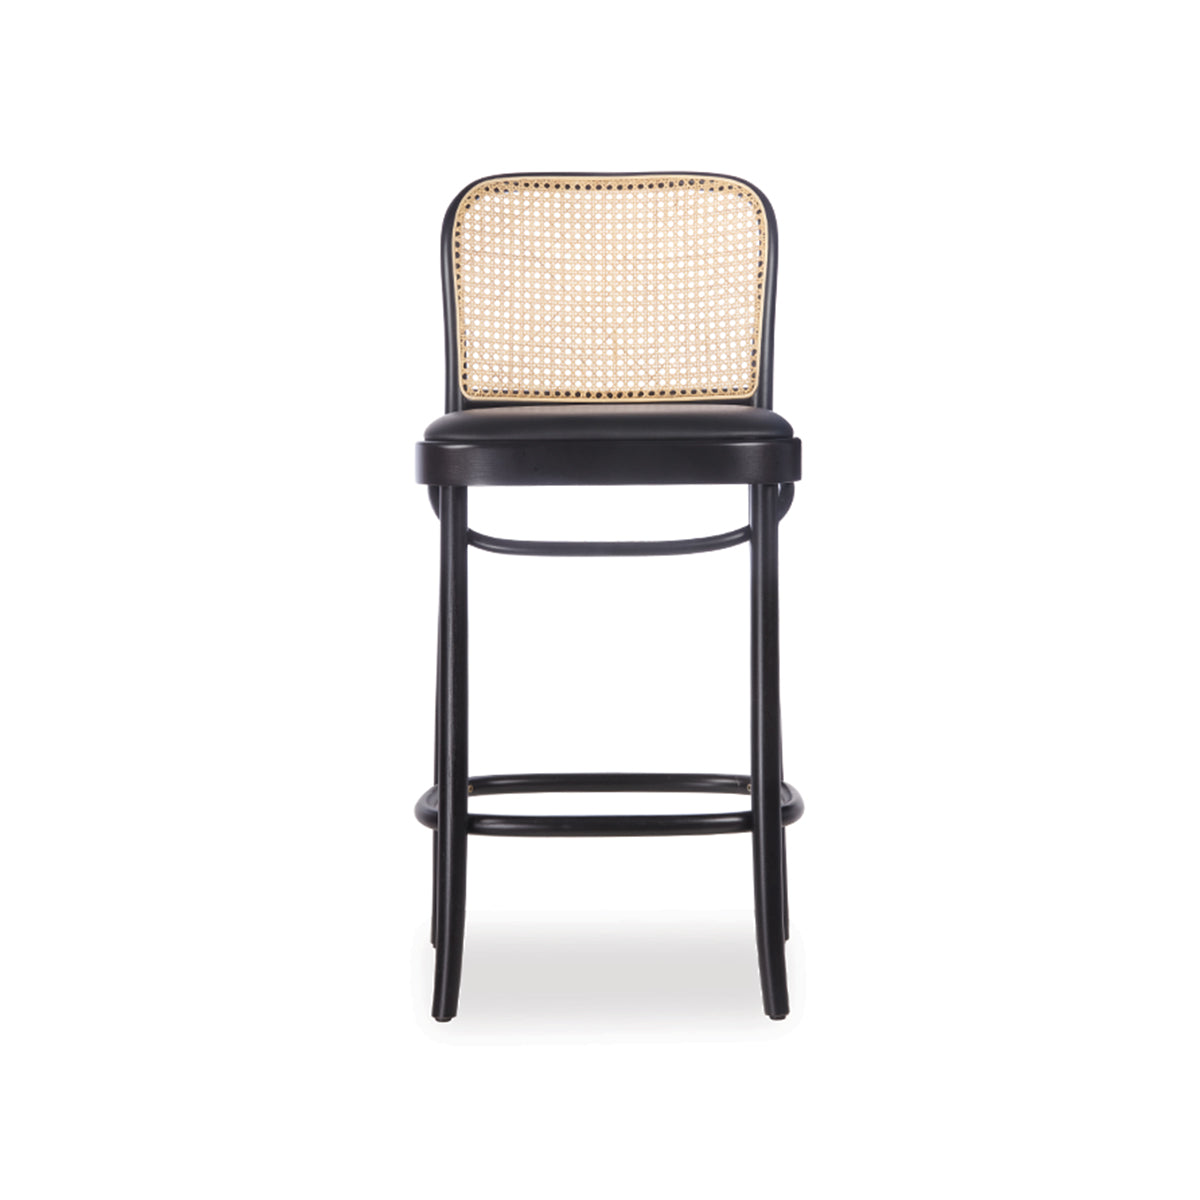 811 Hoffmann Bar Stool - Upholstered Seat/Cane Backrest (Black Stain).